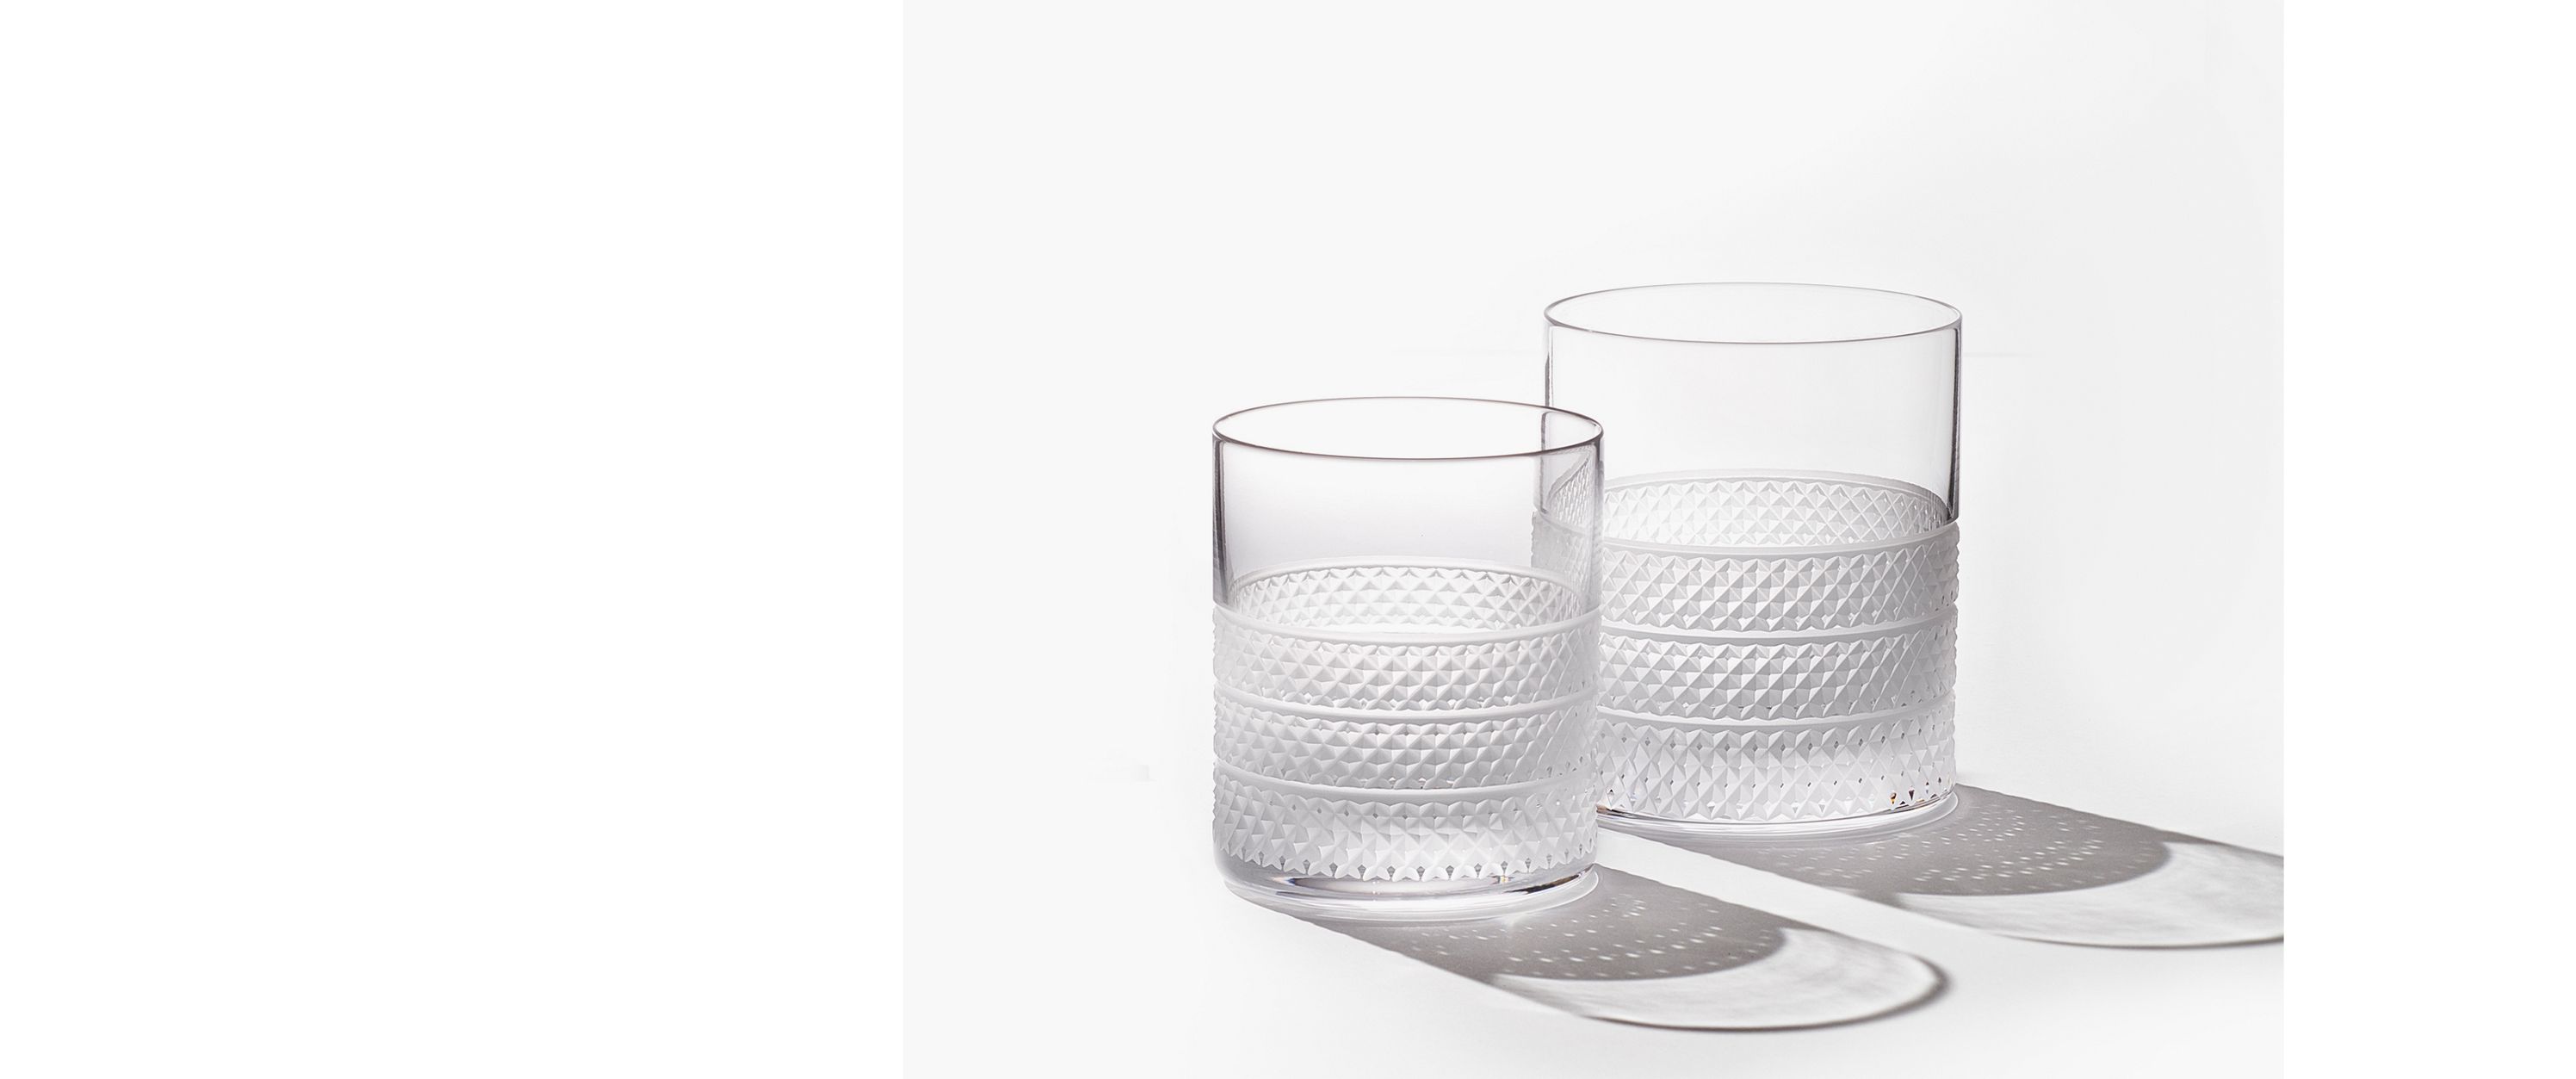 New Designed Handmade Fancy Drinking Glassware Frosty White